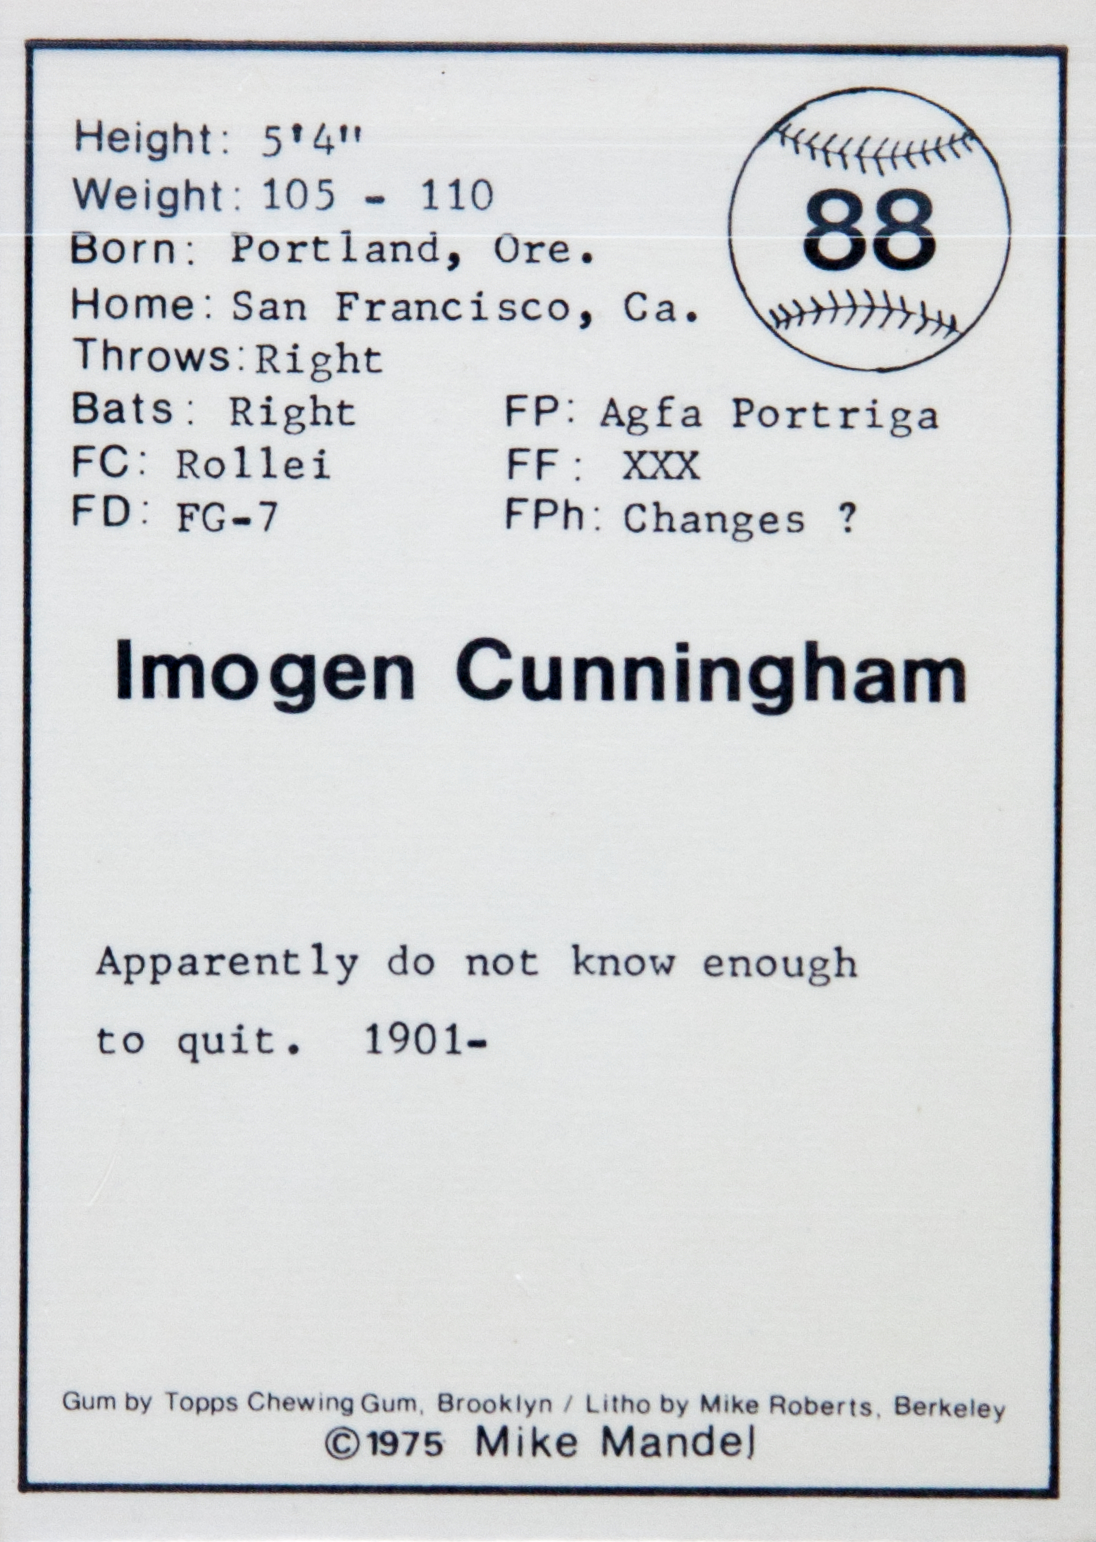 Imogen Cunningham